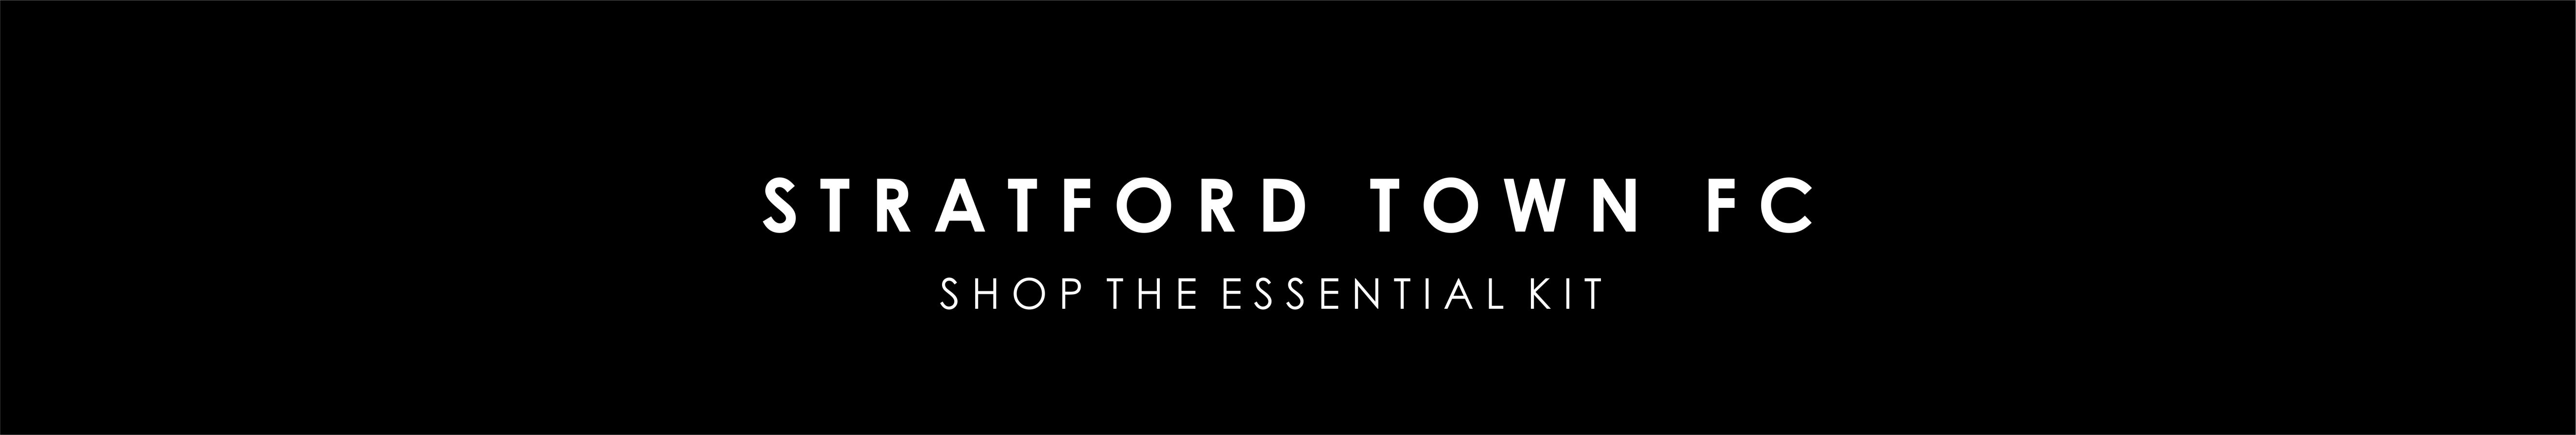 stratford-town-fc-web-banner.jpg